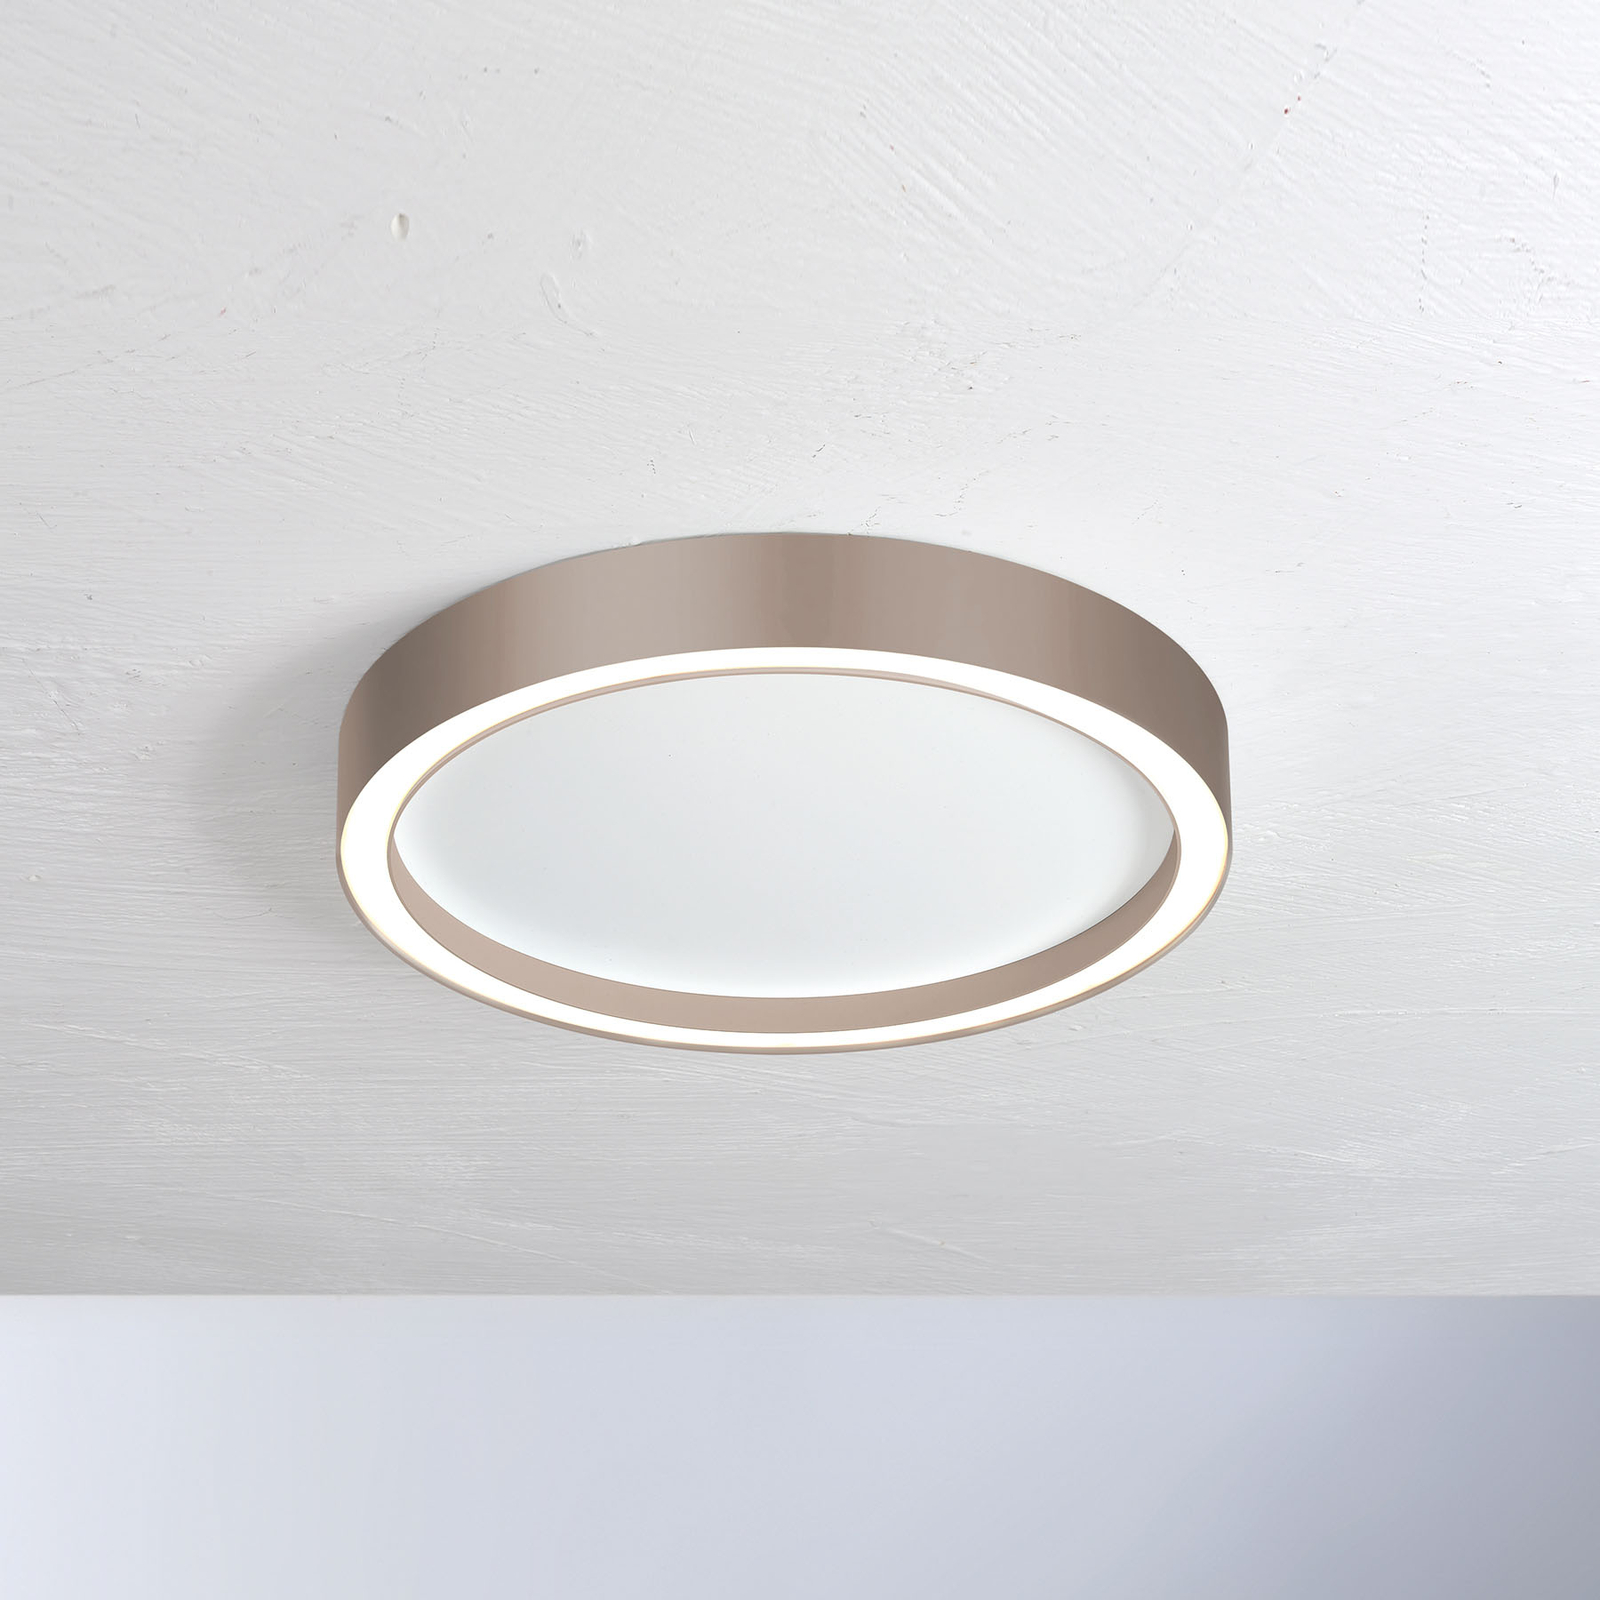 Stropní svítidlo Bopp Aura LED Ø 40 cm bílá/taupe